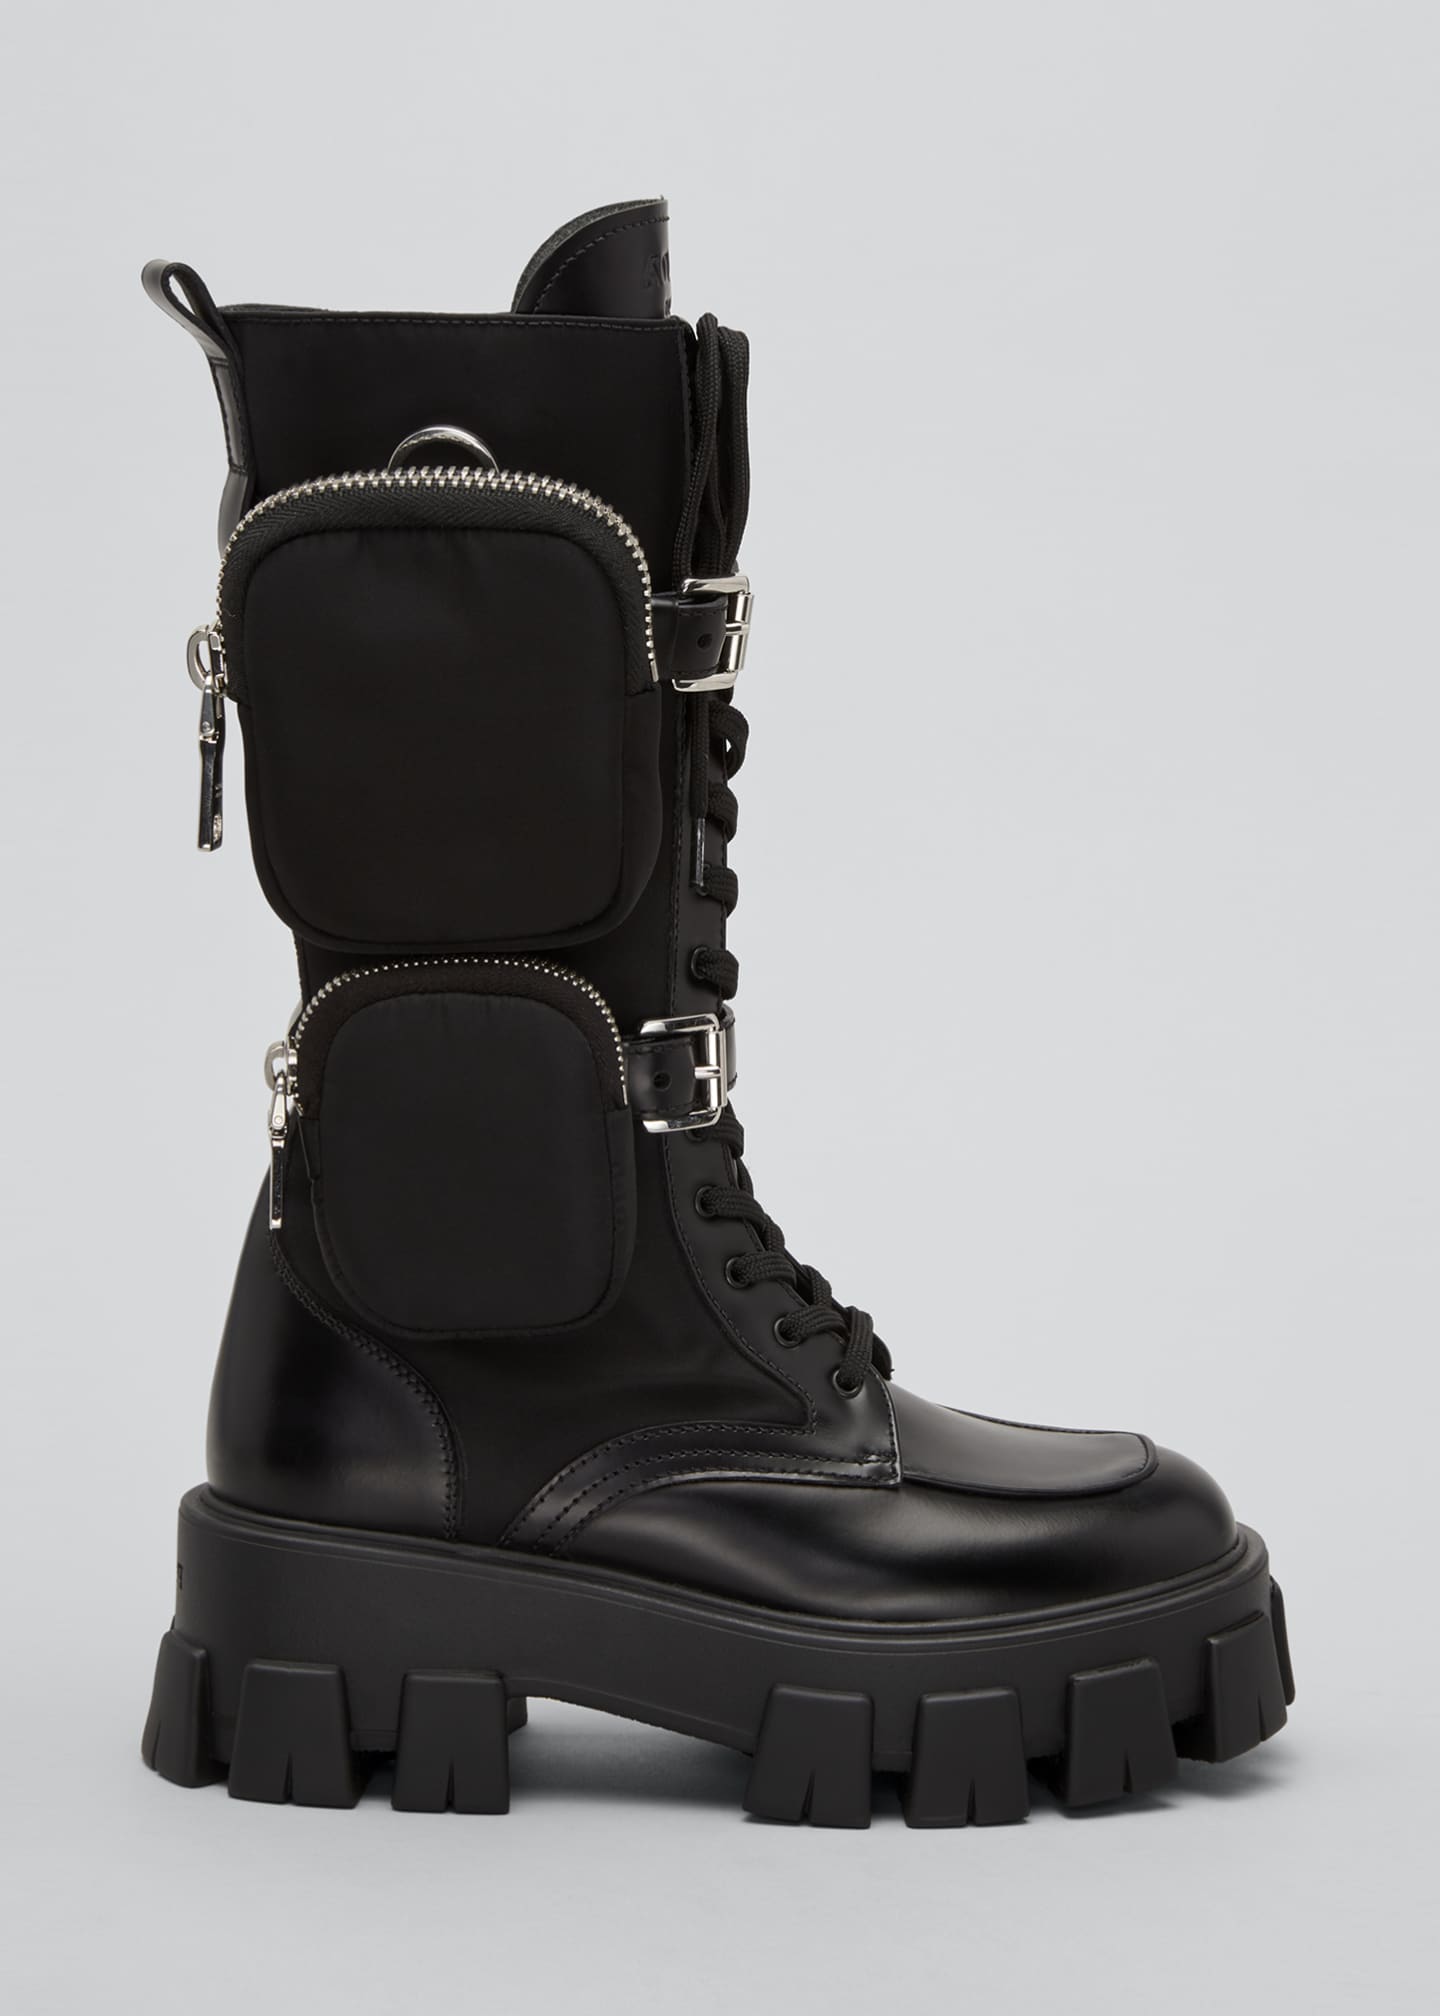 Prada Leather Zip-Pocket Tall Combat Boots - Bergdorf Goodman